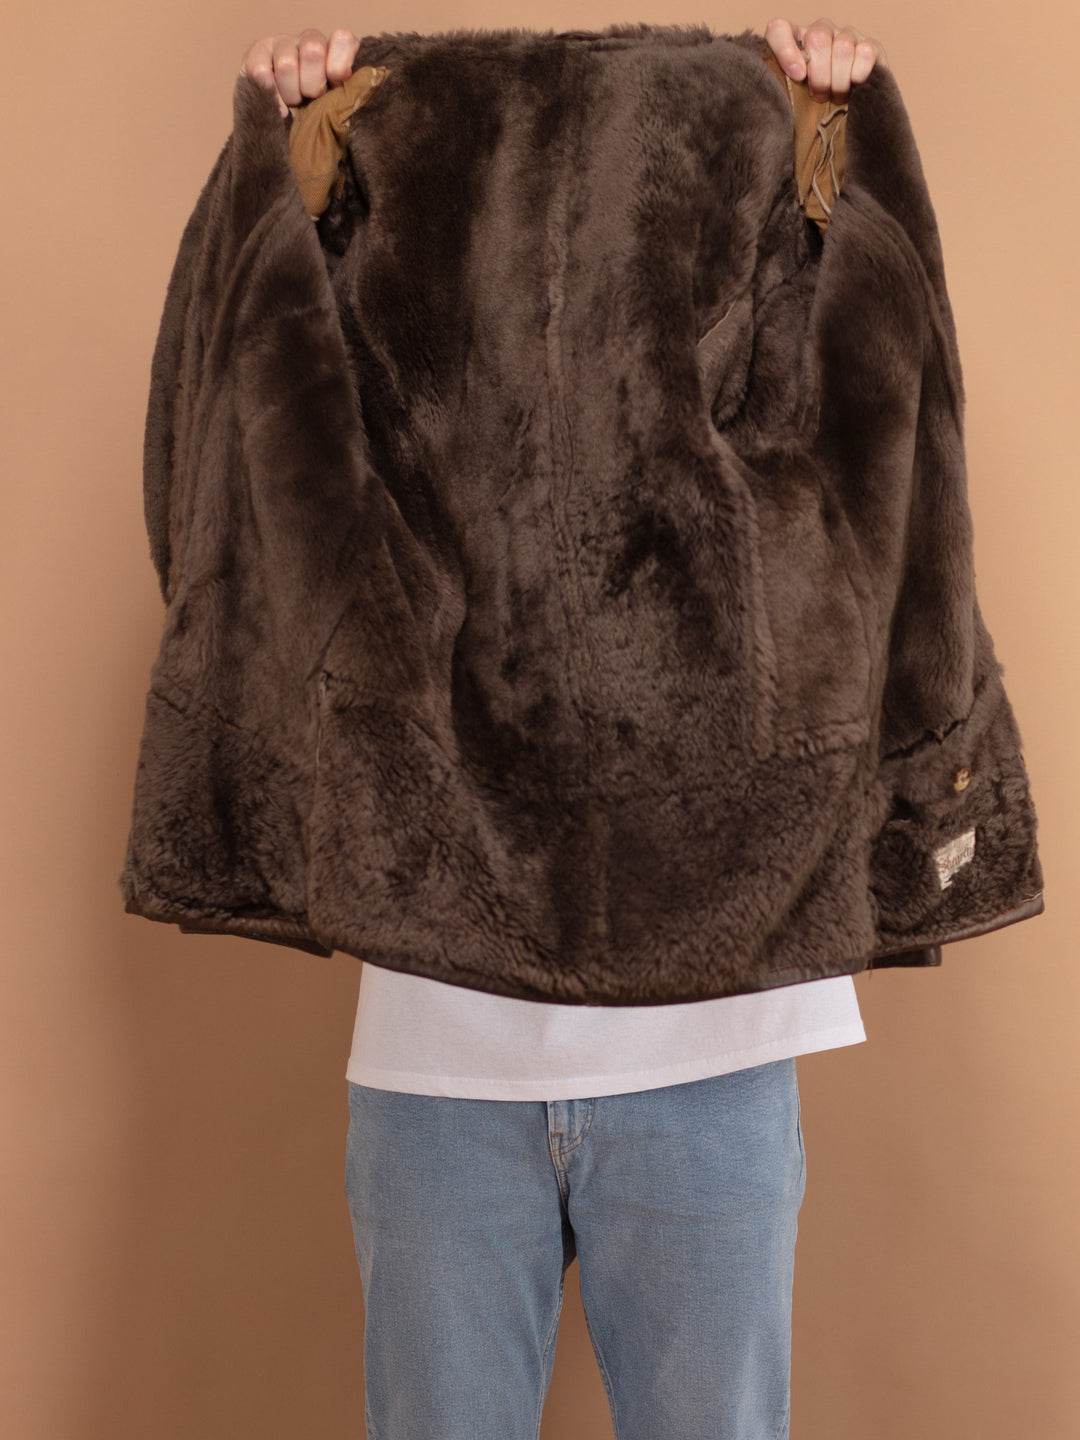 Brown Shearling Coat 80s, Size Medium, Men Sheepskin Leather Coat, Button Up Winter Coat, Men Retro Outerwear